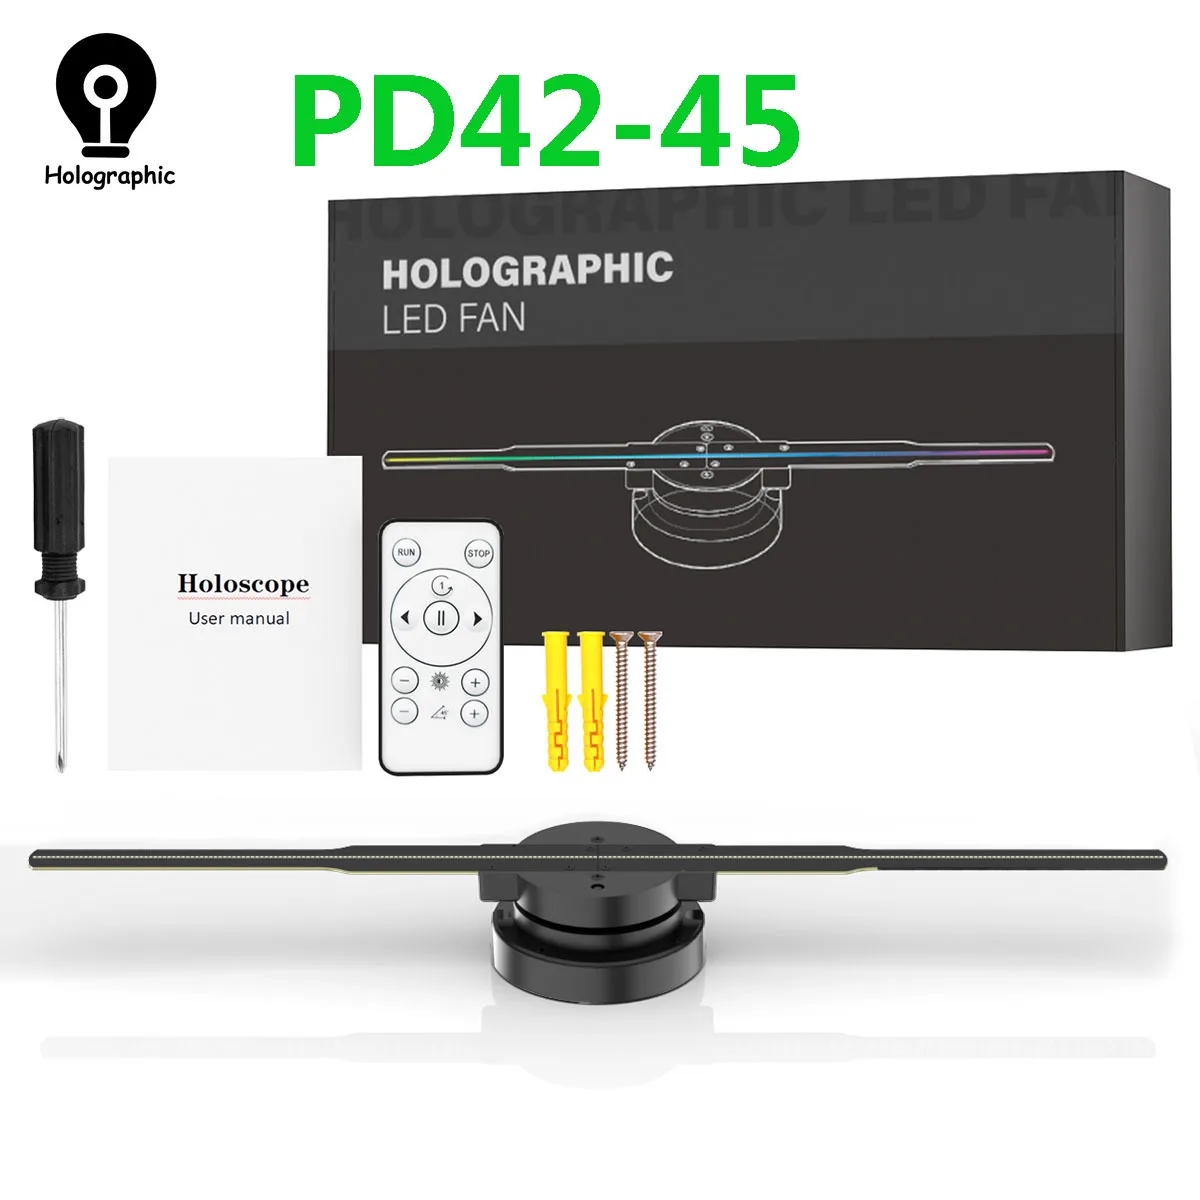 ULtrashort Outdoor Mini Pocket Proyector Portatil Holographic Video 1080p  Full Hd Passive 4k 3d Hologram Laser Projector - AliExpress